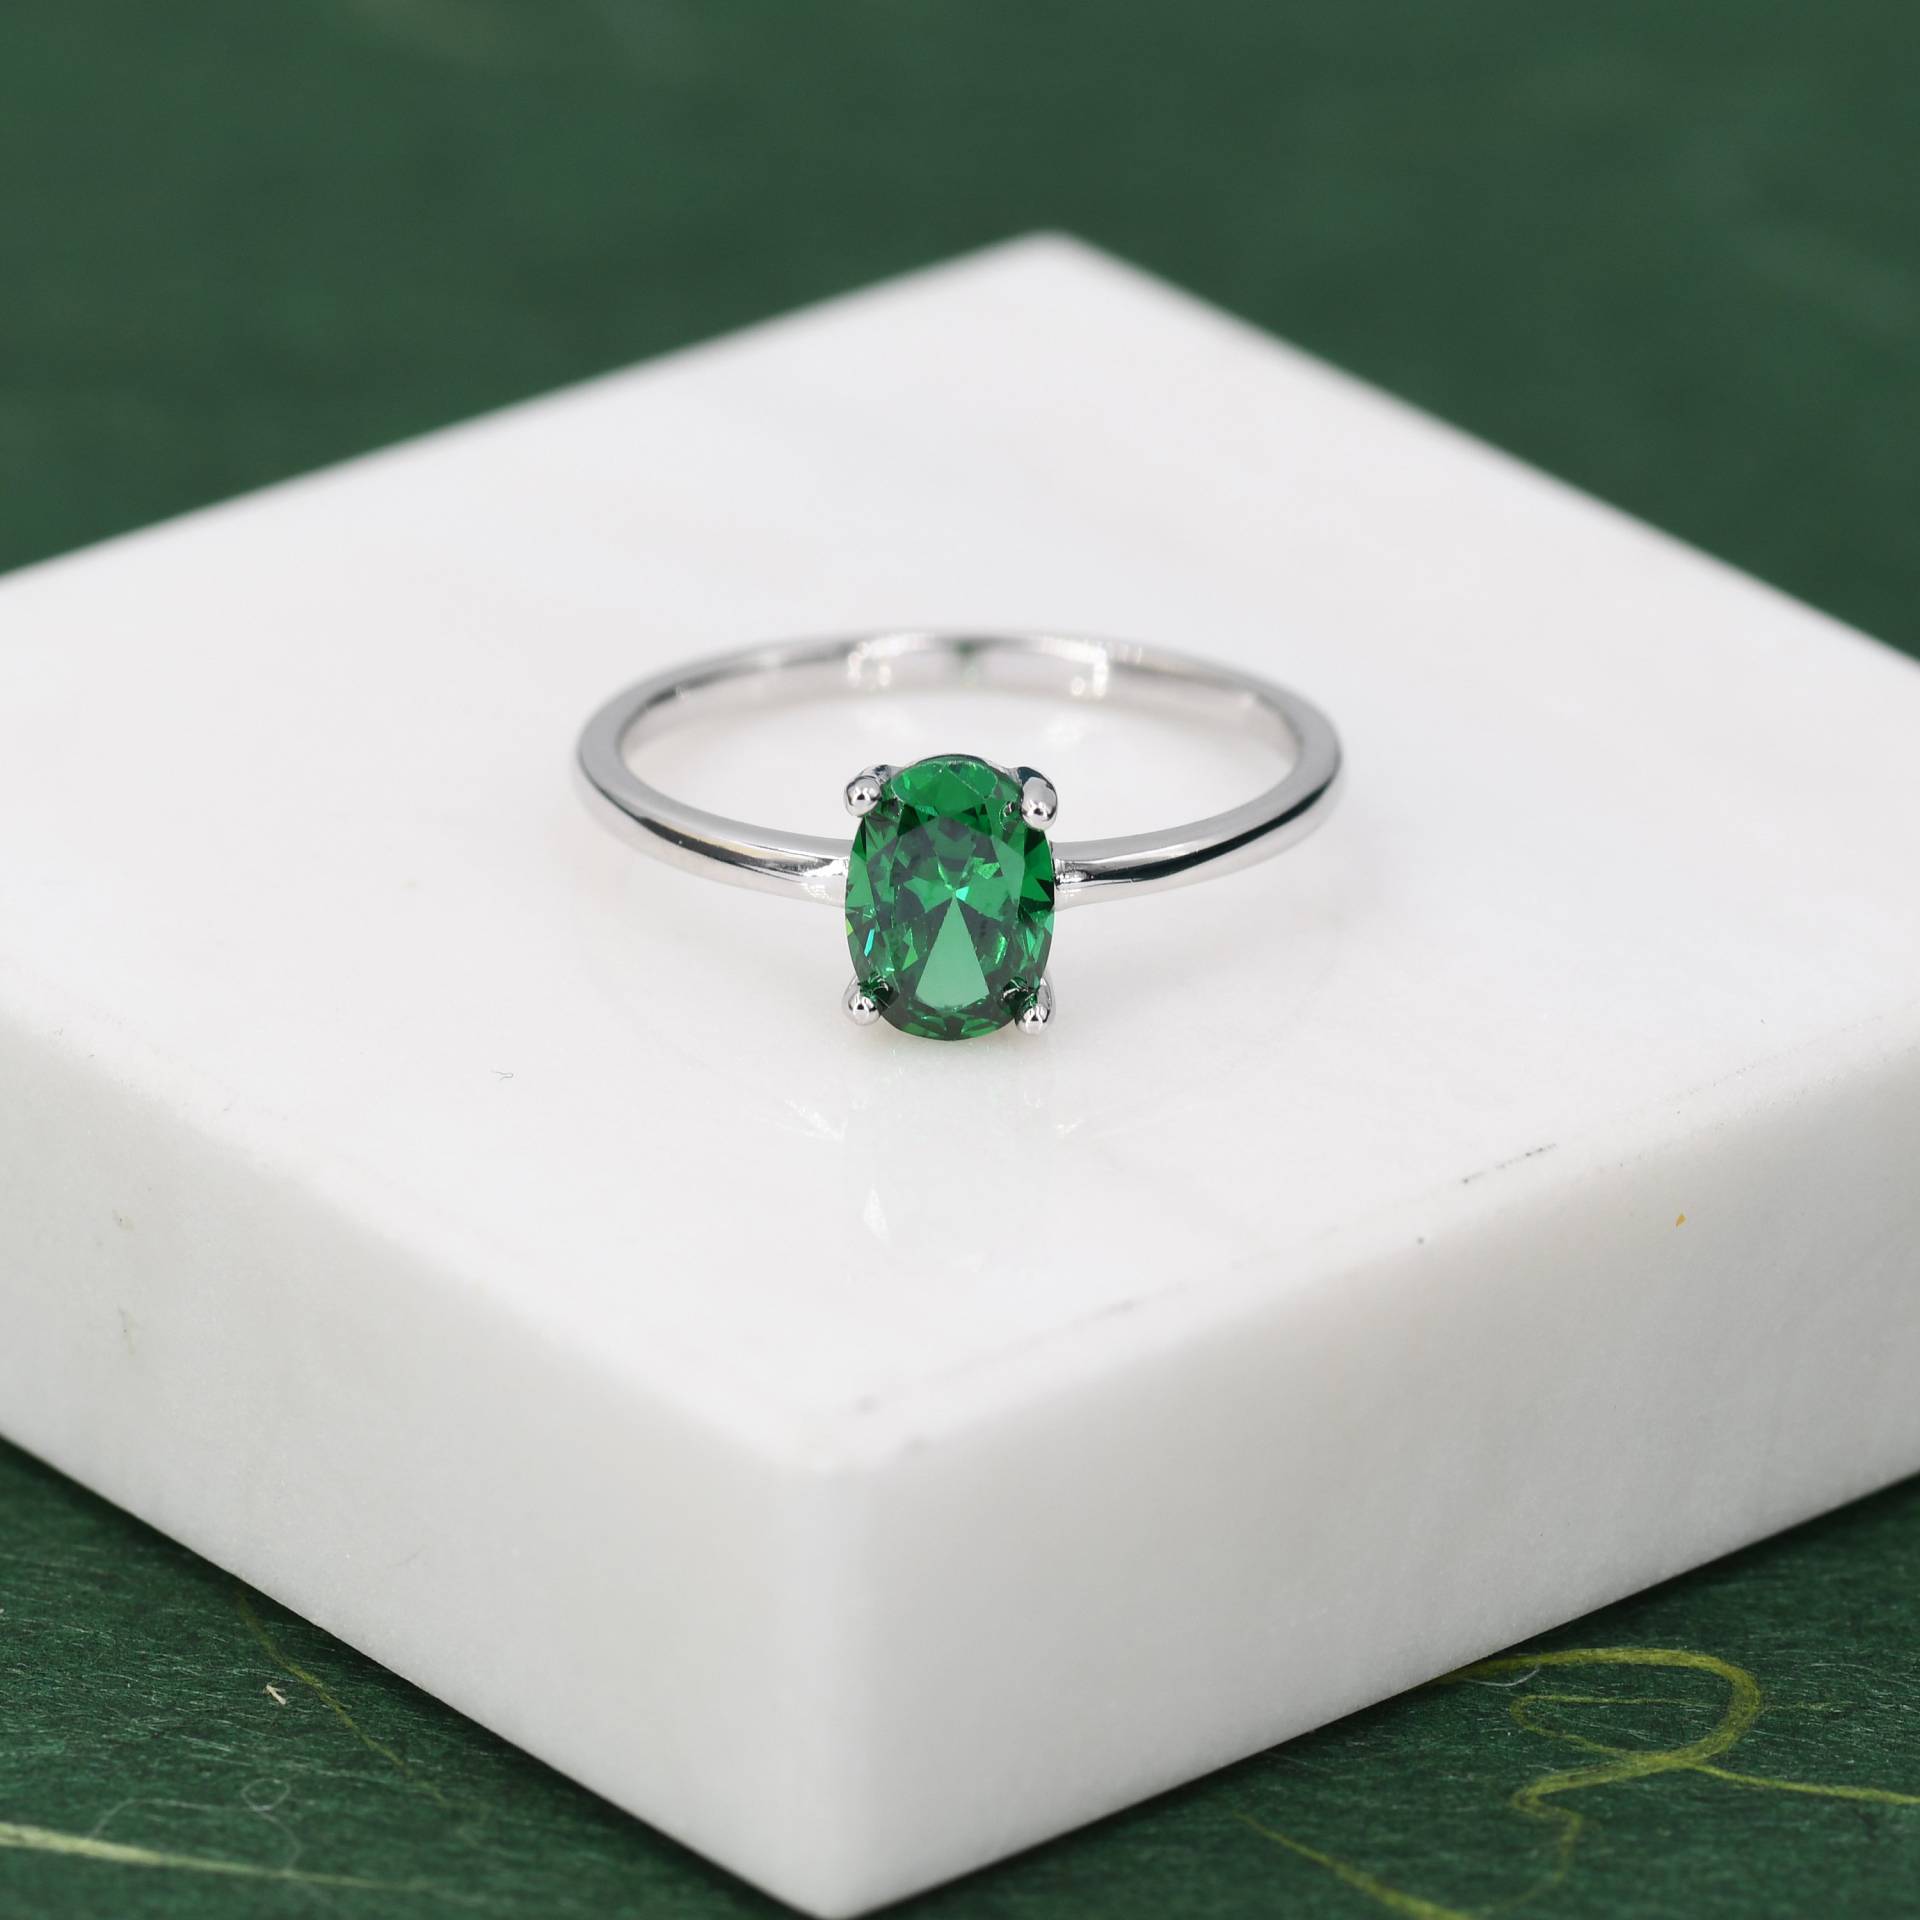 1 Karat Smaragdgrün Cz Oval Cut Ring in Sterling Silber, 5x7mm Grüner Zirkon Ring, Us Größe 5-8, Mai Birthstone von SilverRainSilver